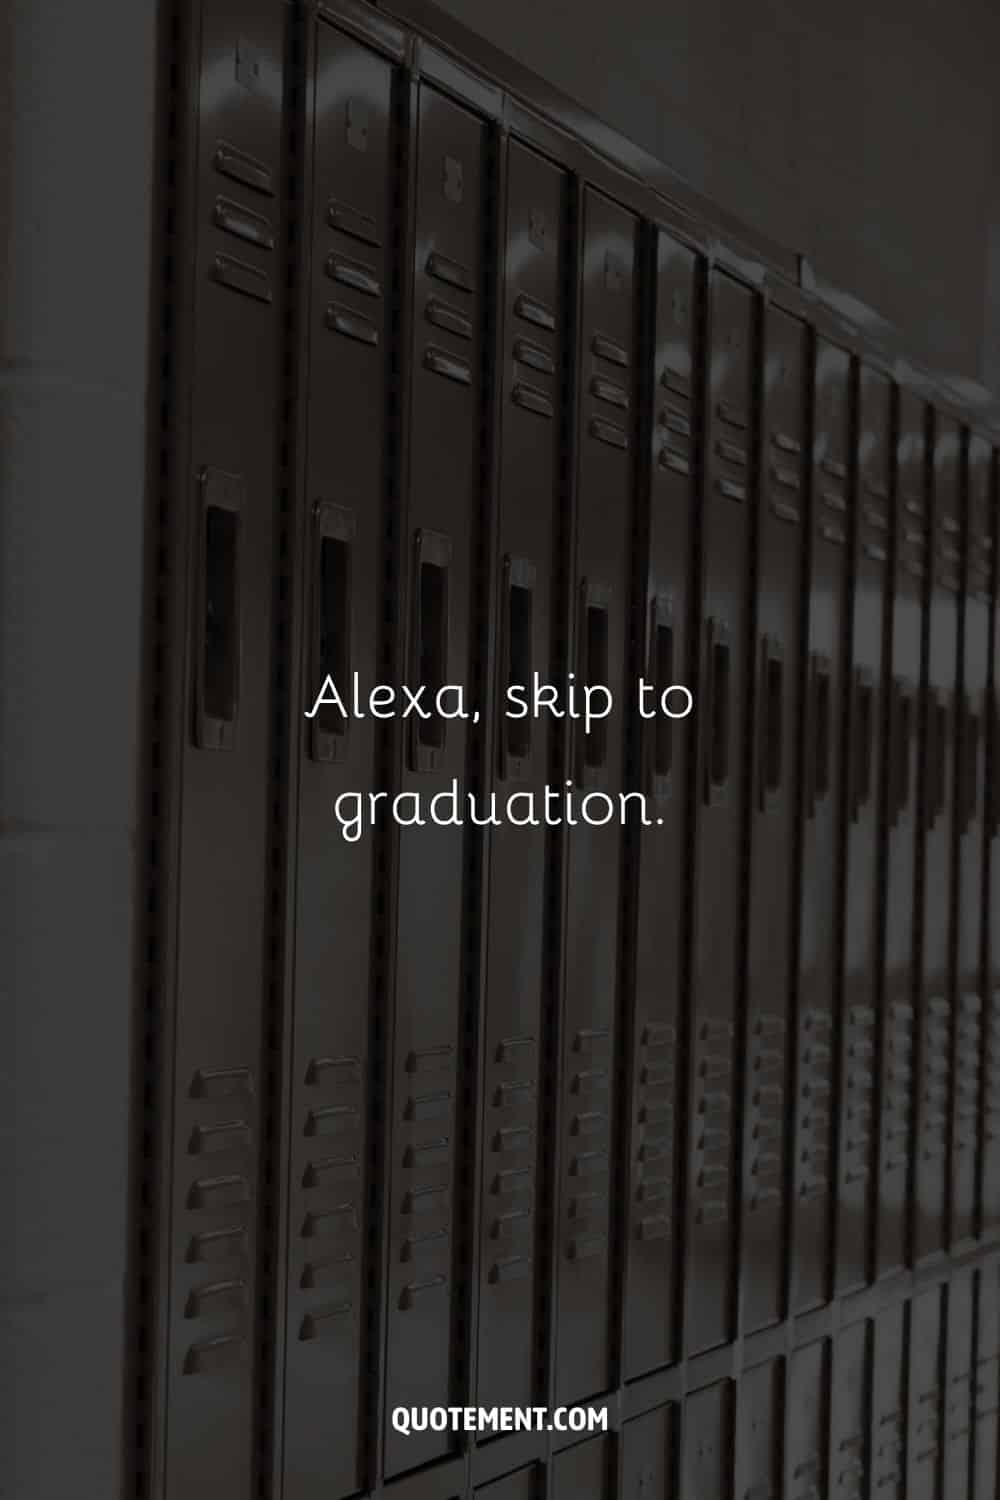 Alexa, skip to graduation.